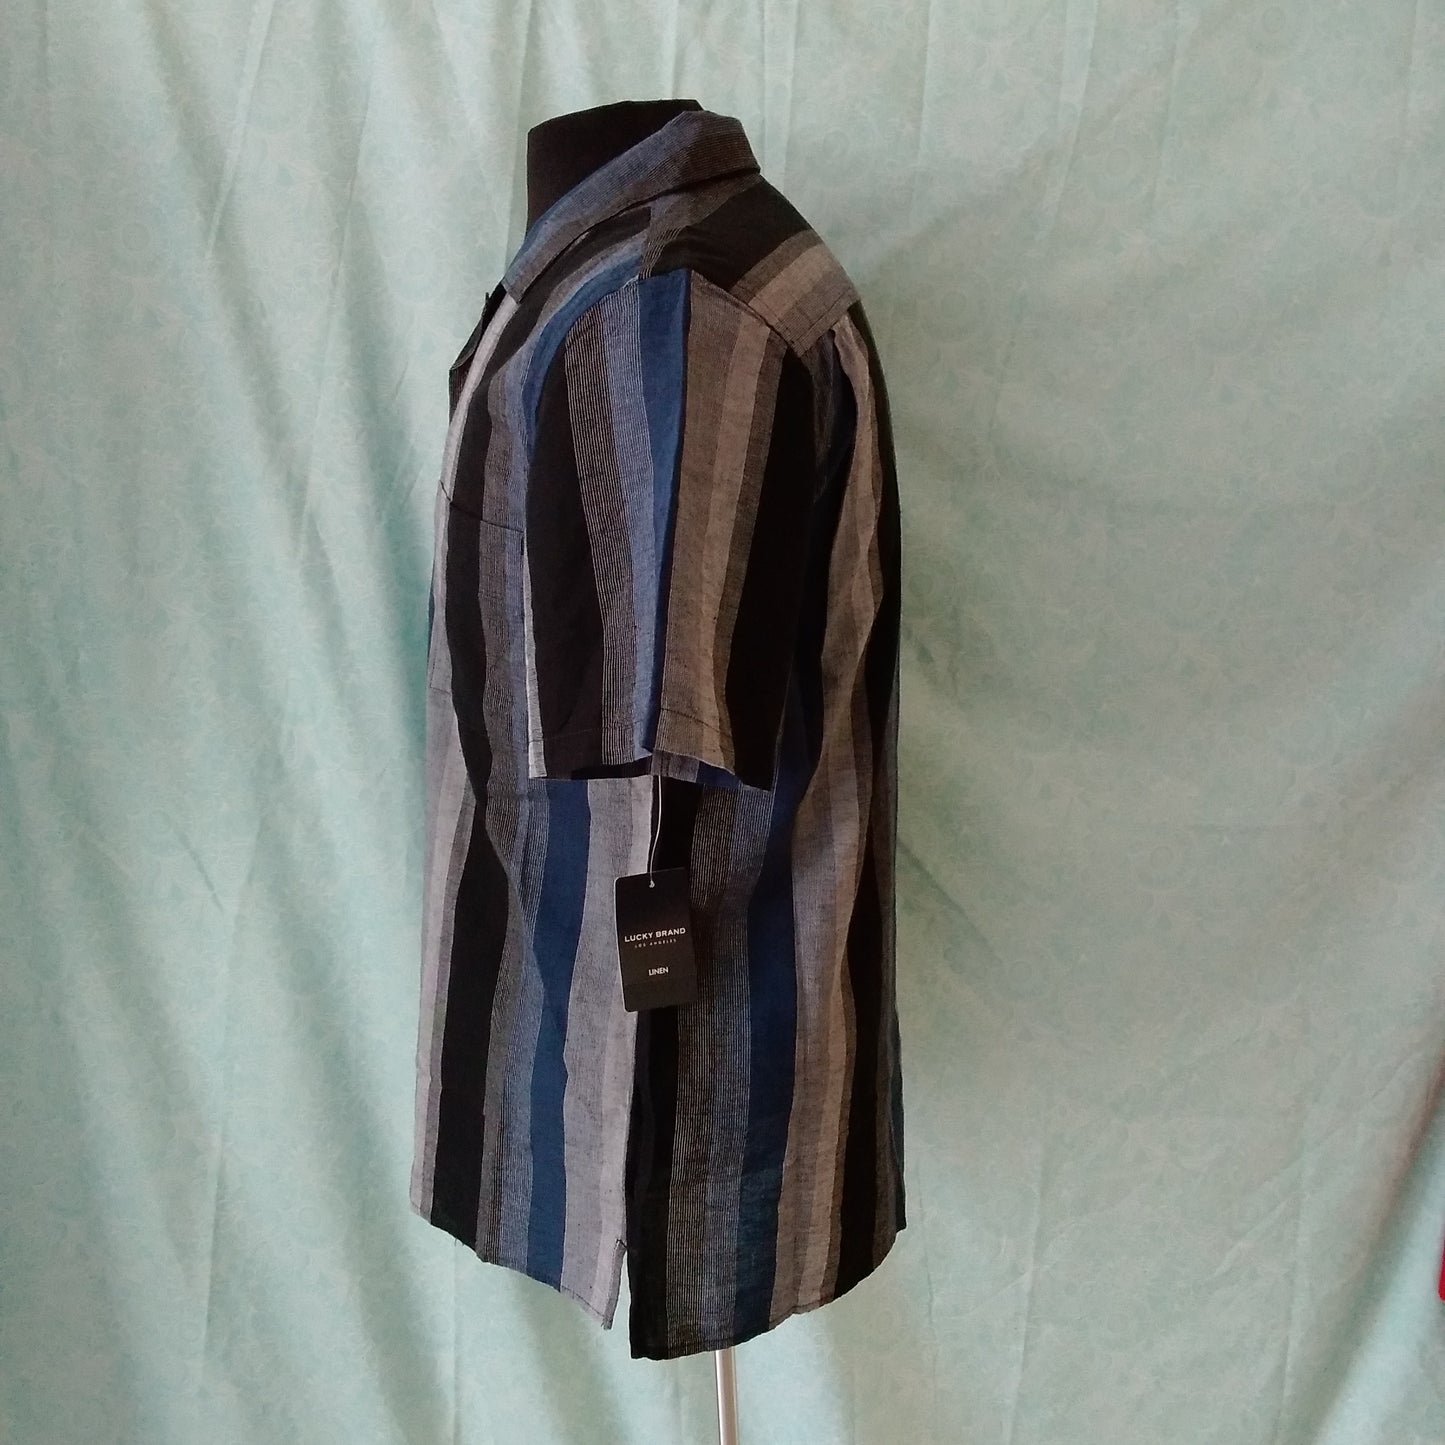 Lucky Brand Men's Blue Striped Short Sleeve Shirt NWT- Size S